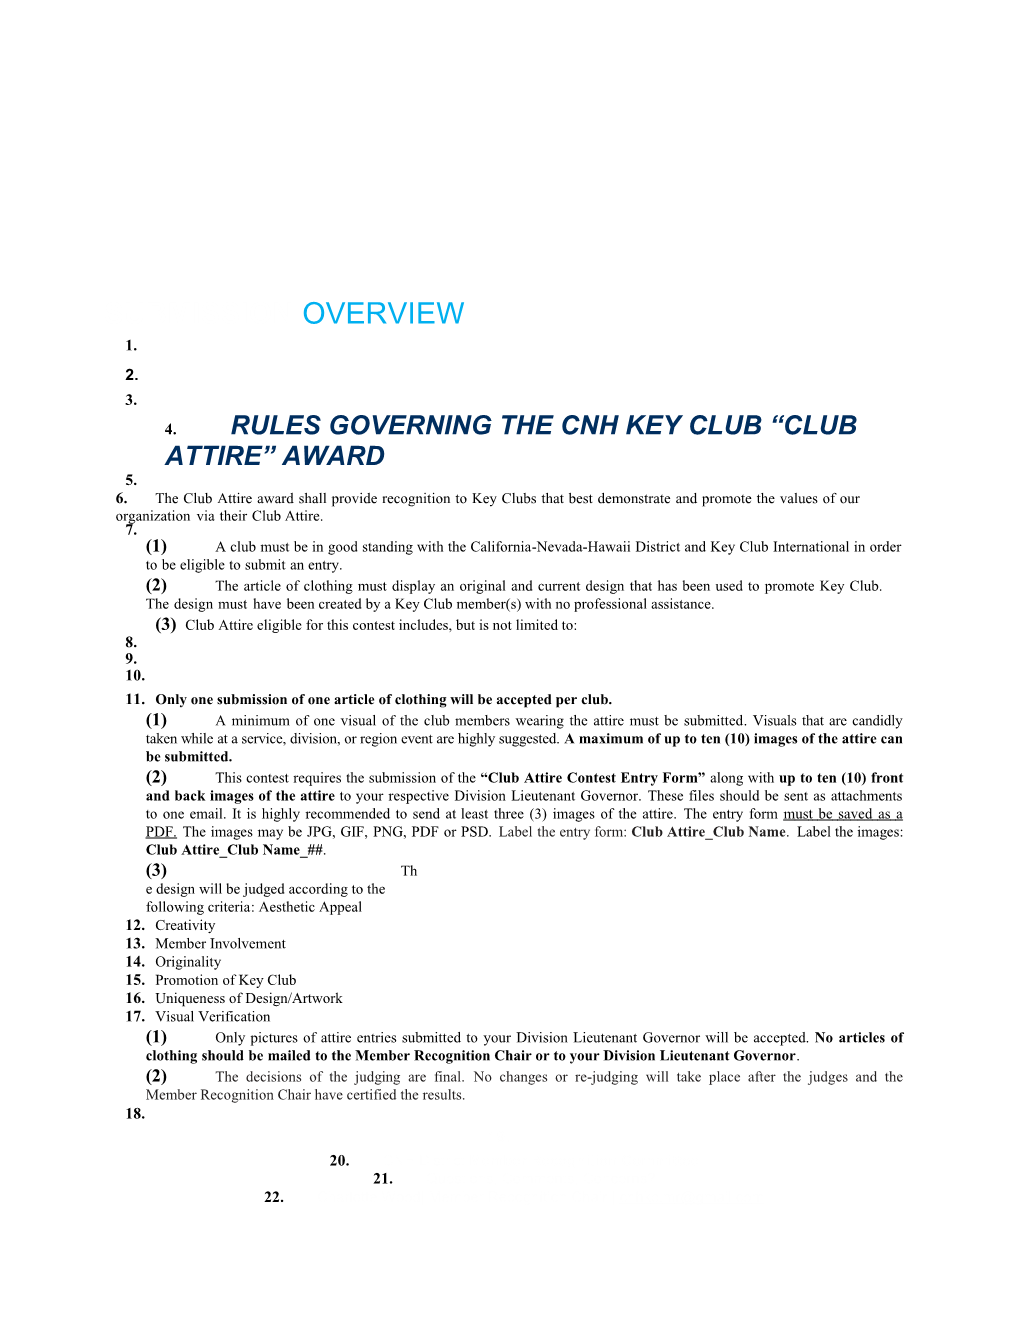 Rulesgoverningthecnhkeyclub Club Attire Award